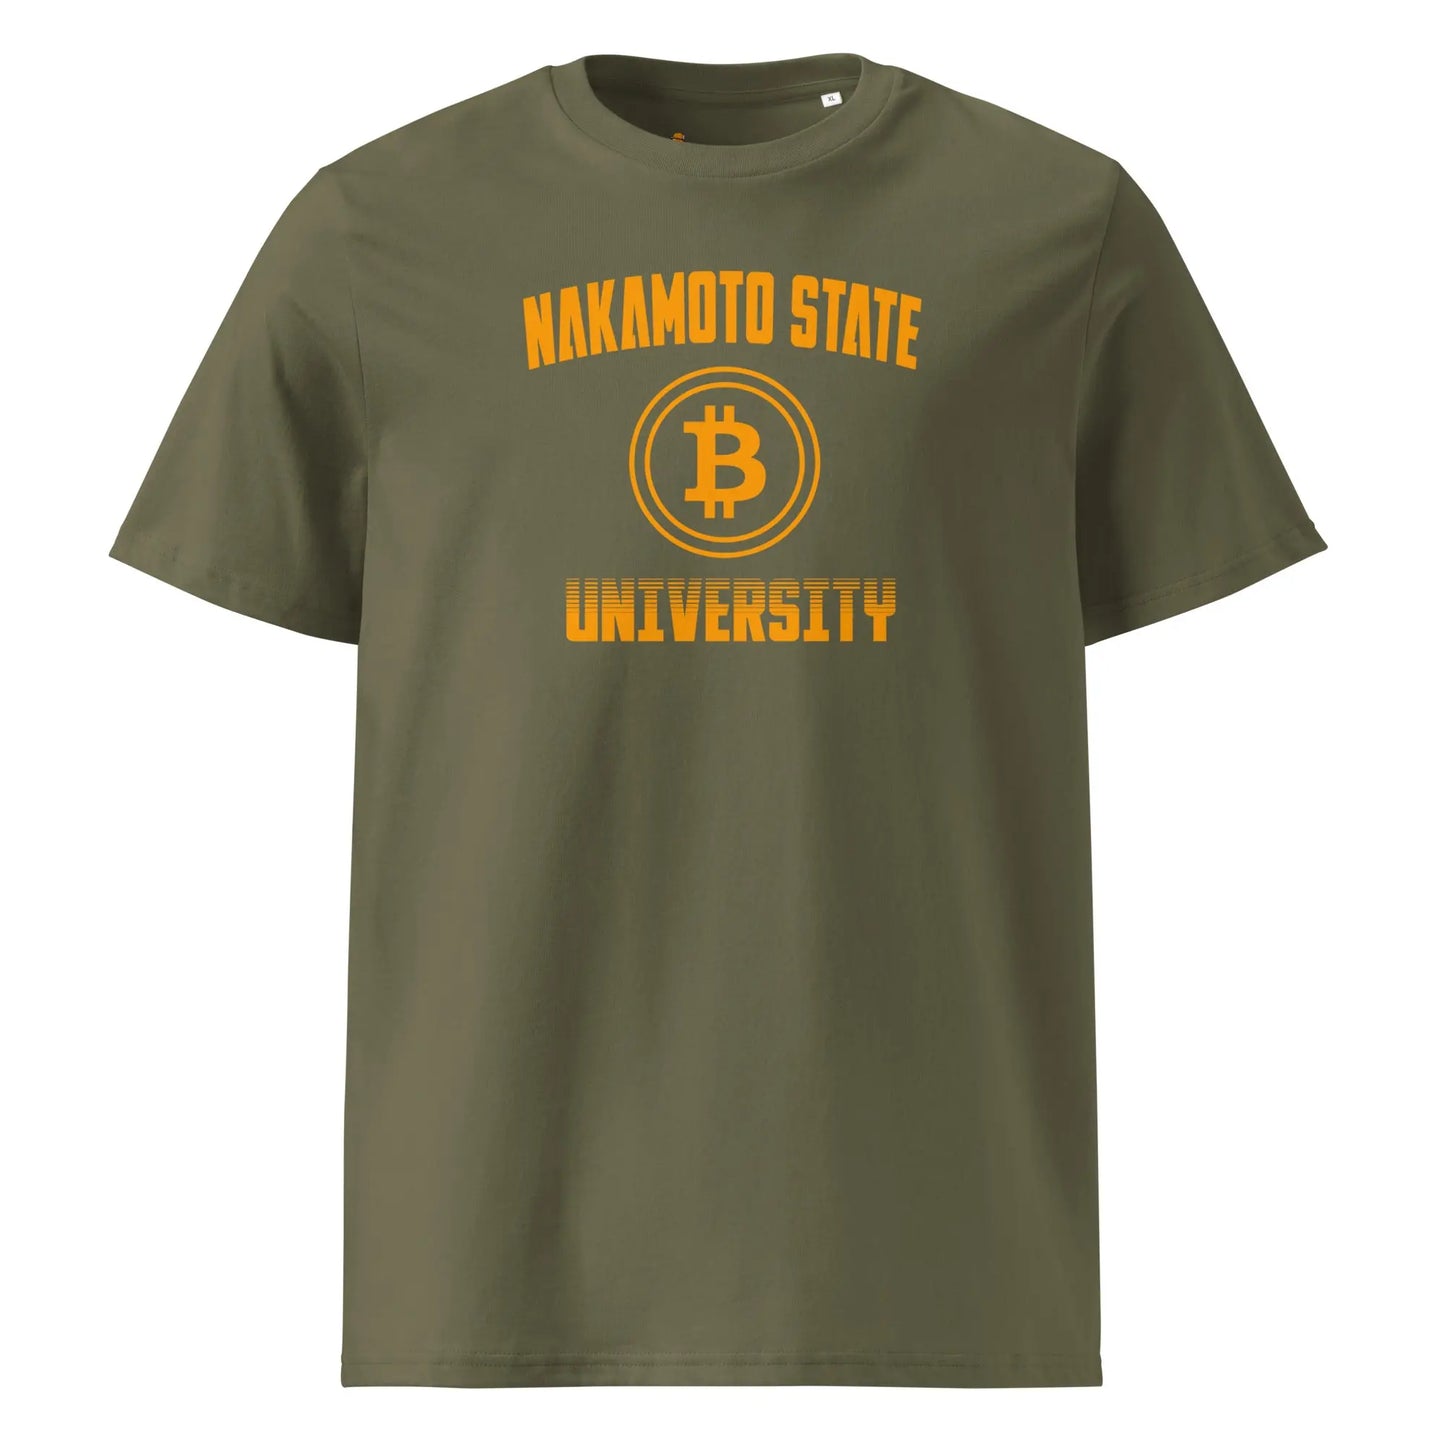 Nakamoto State University - Premium Unisex Organic Cotton Bitcoin T-shirt Store of ValueNakamoto State University - Premium Unisex Organic Cotton Bitcoin T-shirt Khaki Color